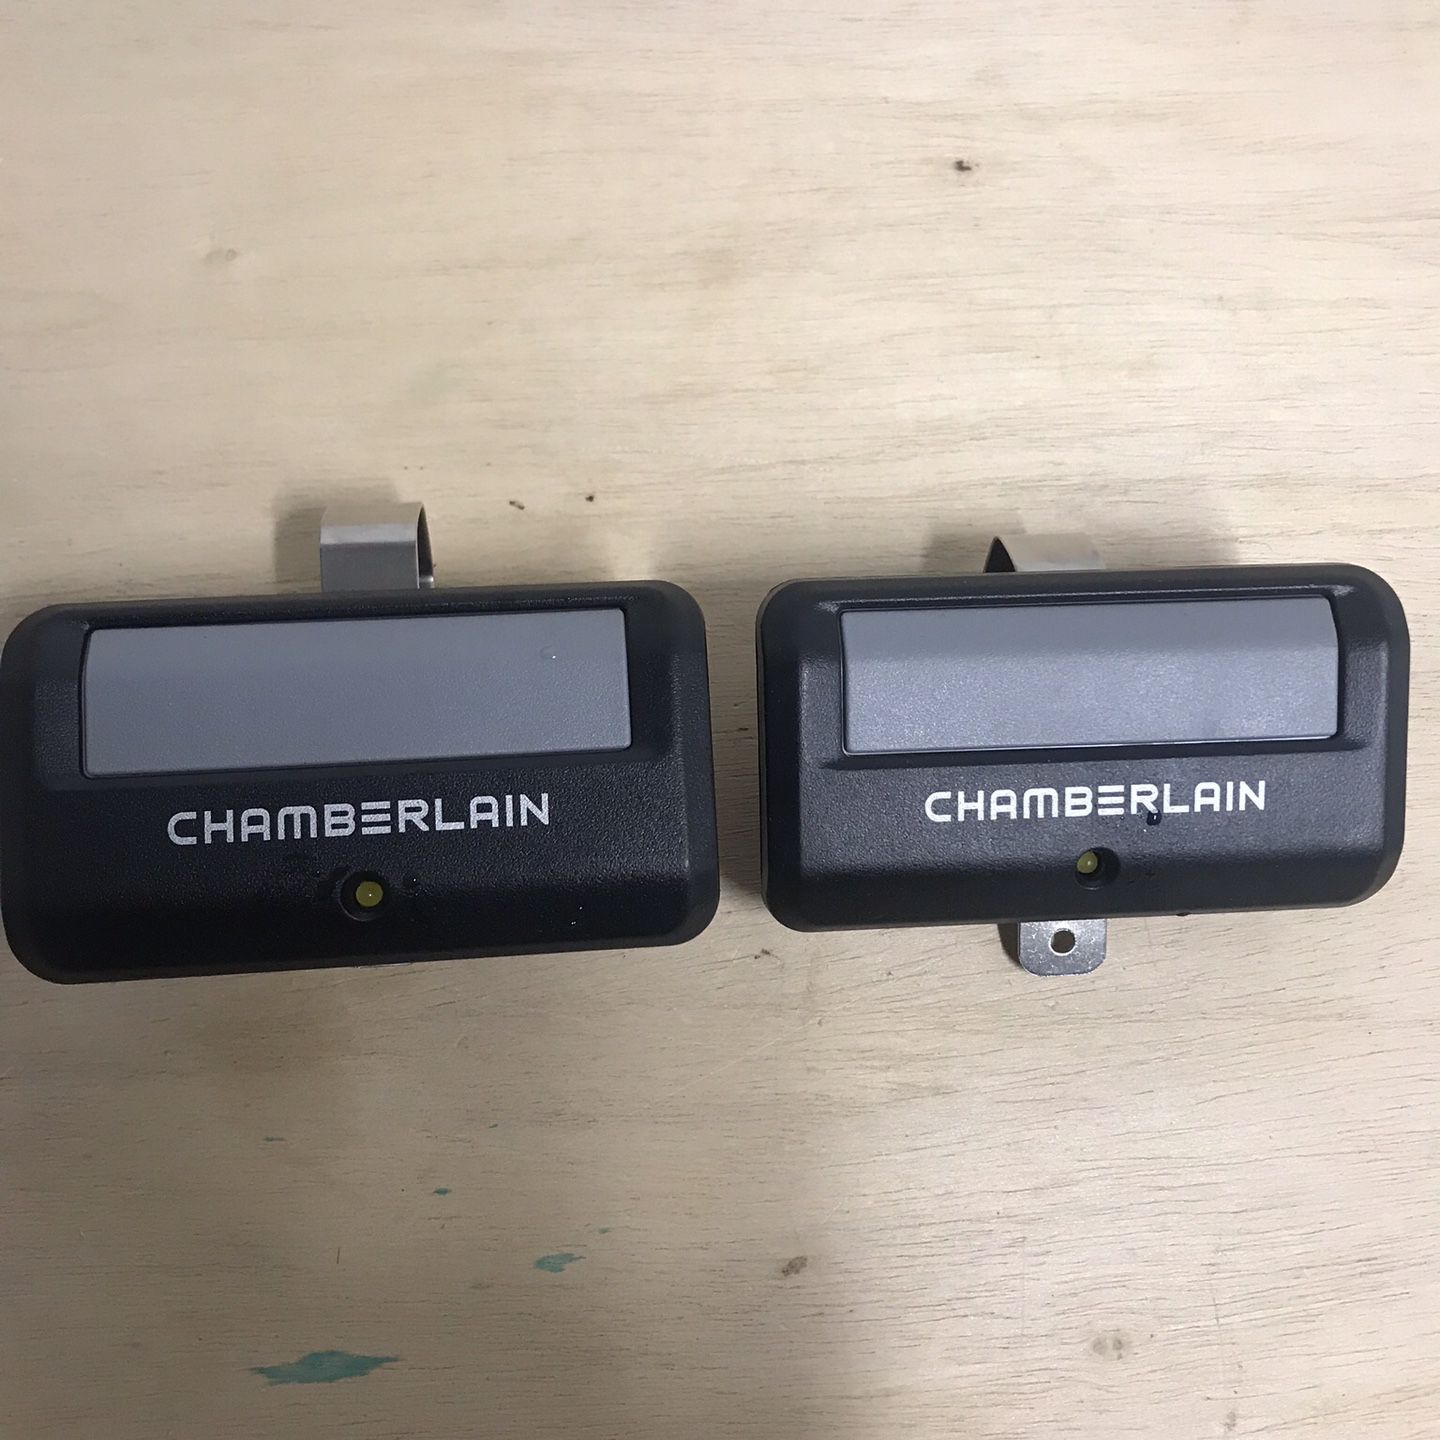 2 Chamberlain Universal Garage Door Openers Remote